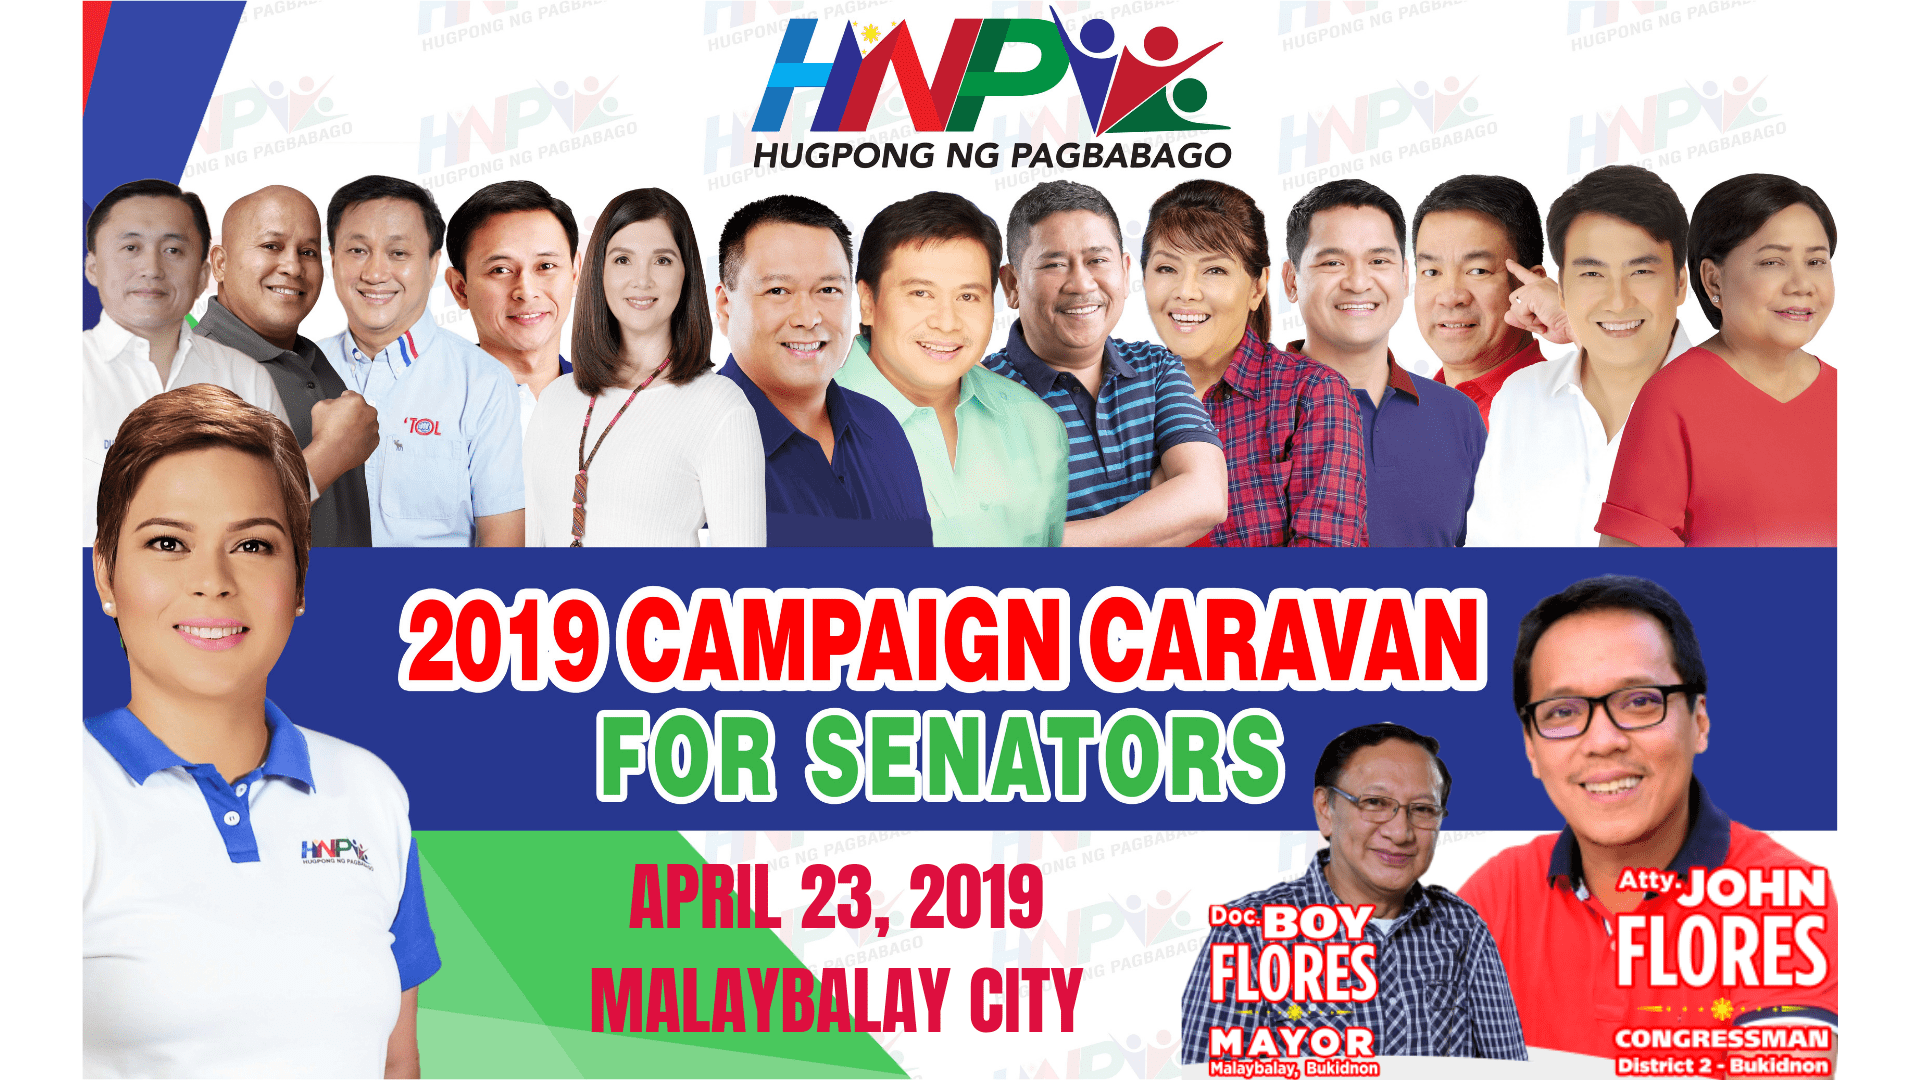 Sara Duterte, Hugpong ng Pagbabago to visit Bukidnon, show support for Team Flores